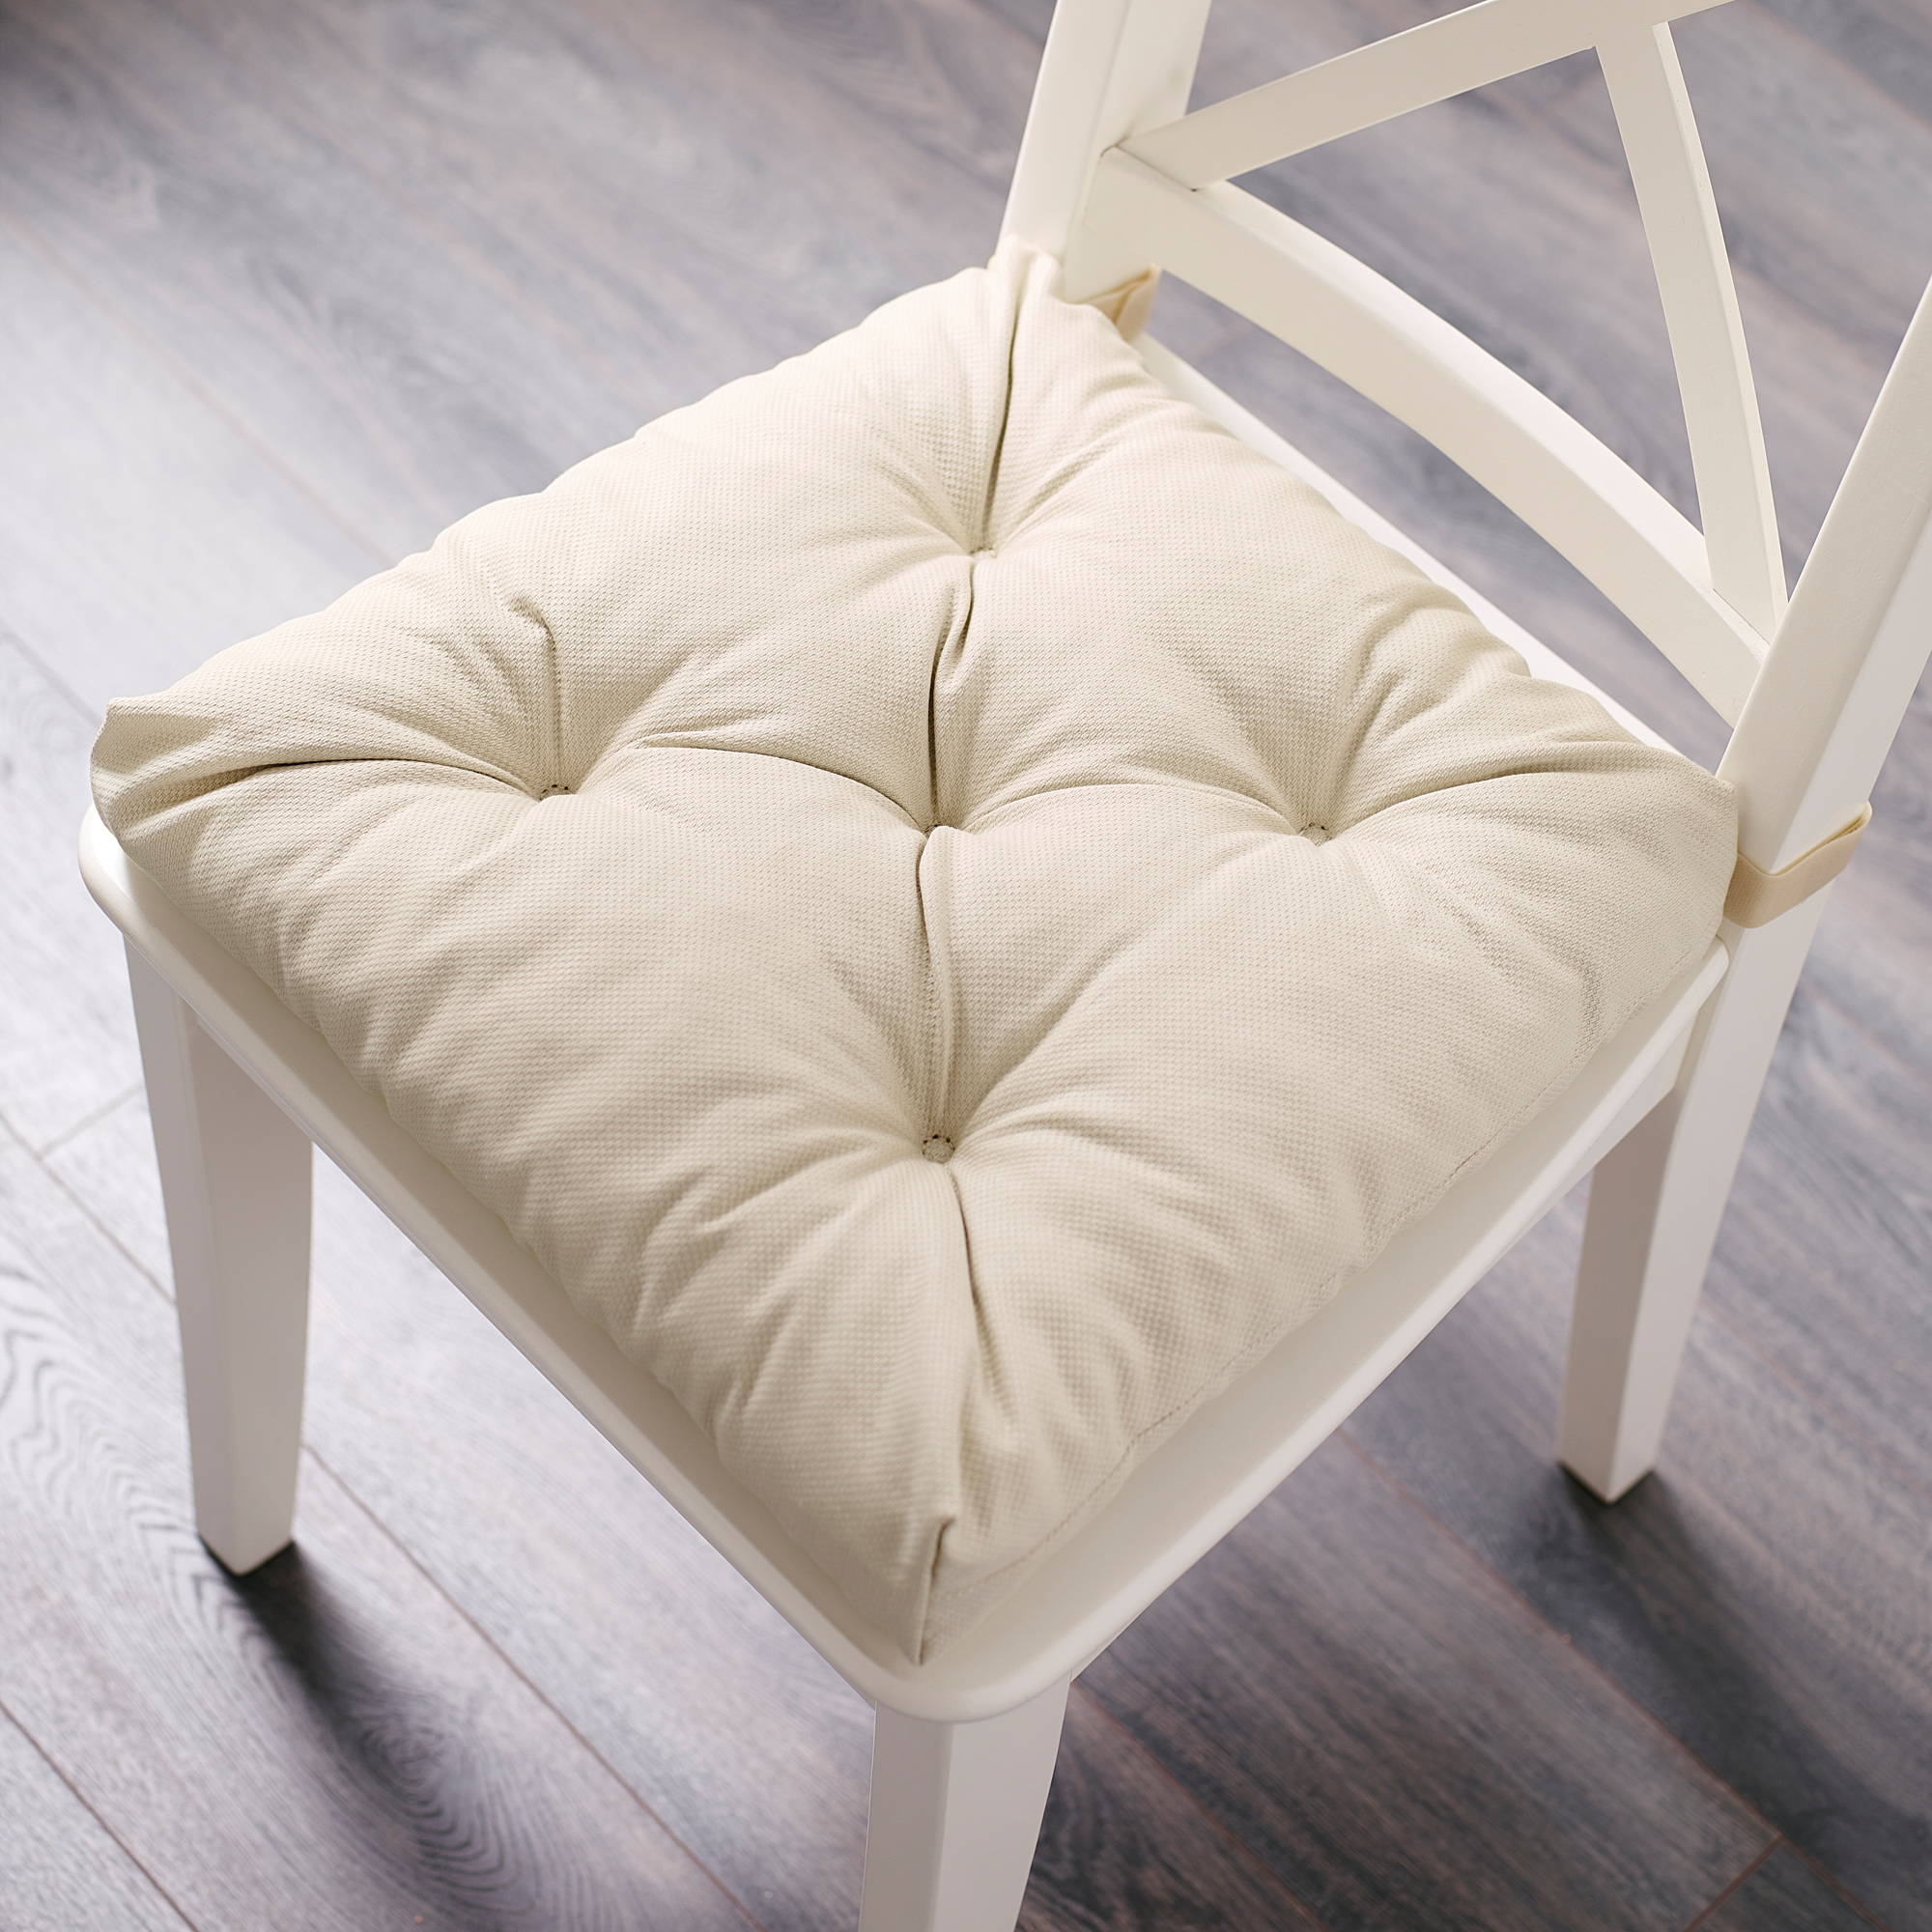 MALINDA chair cushion